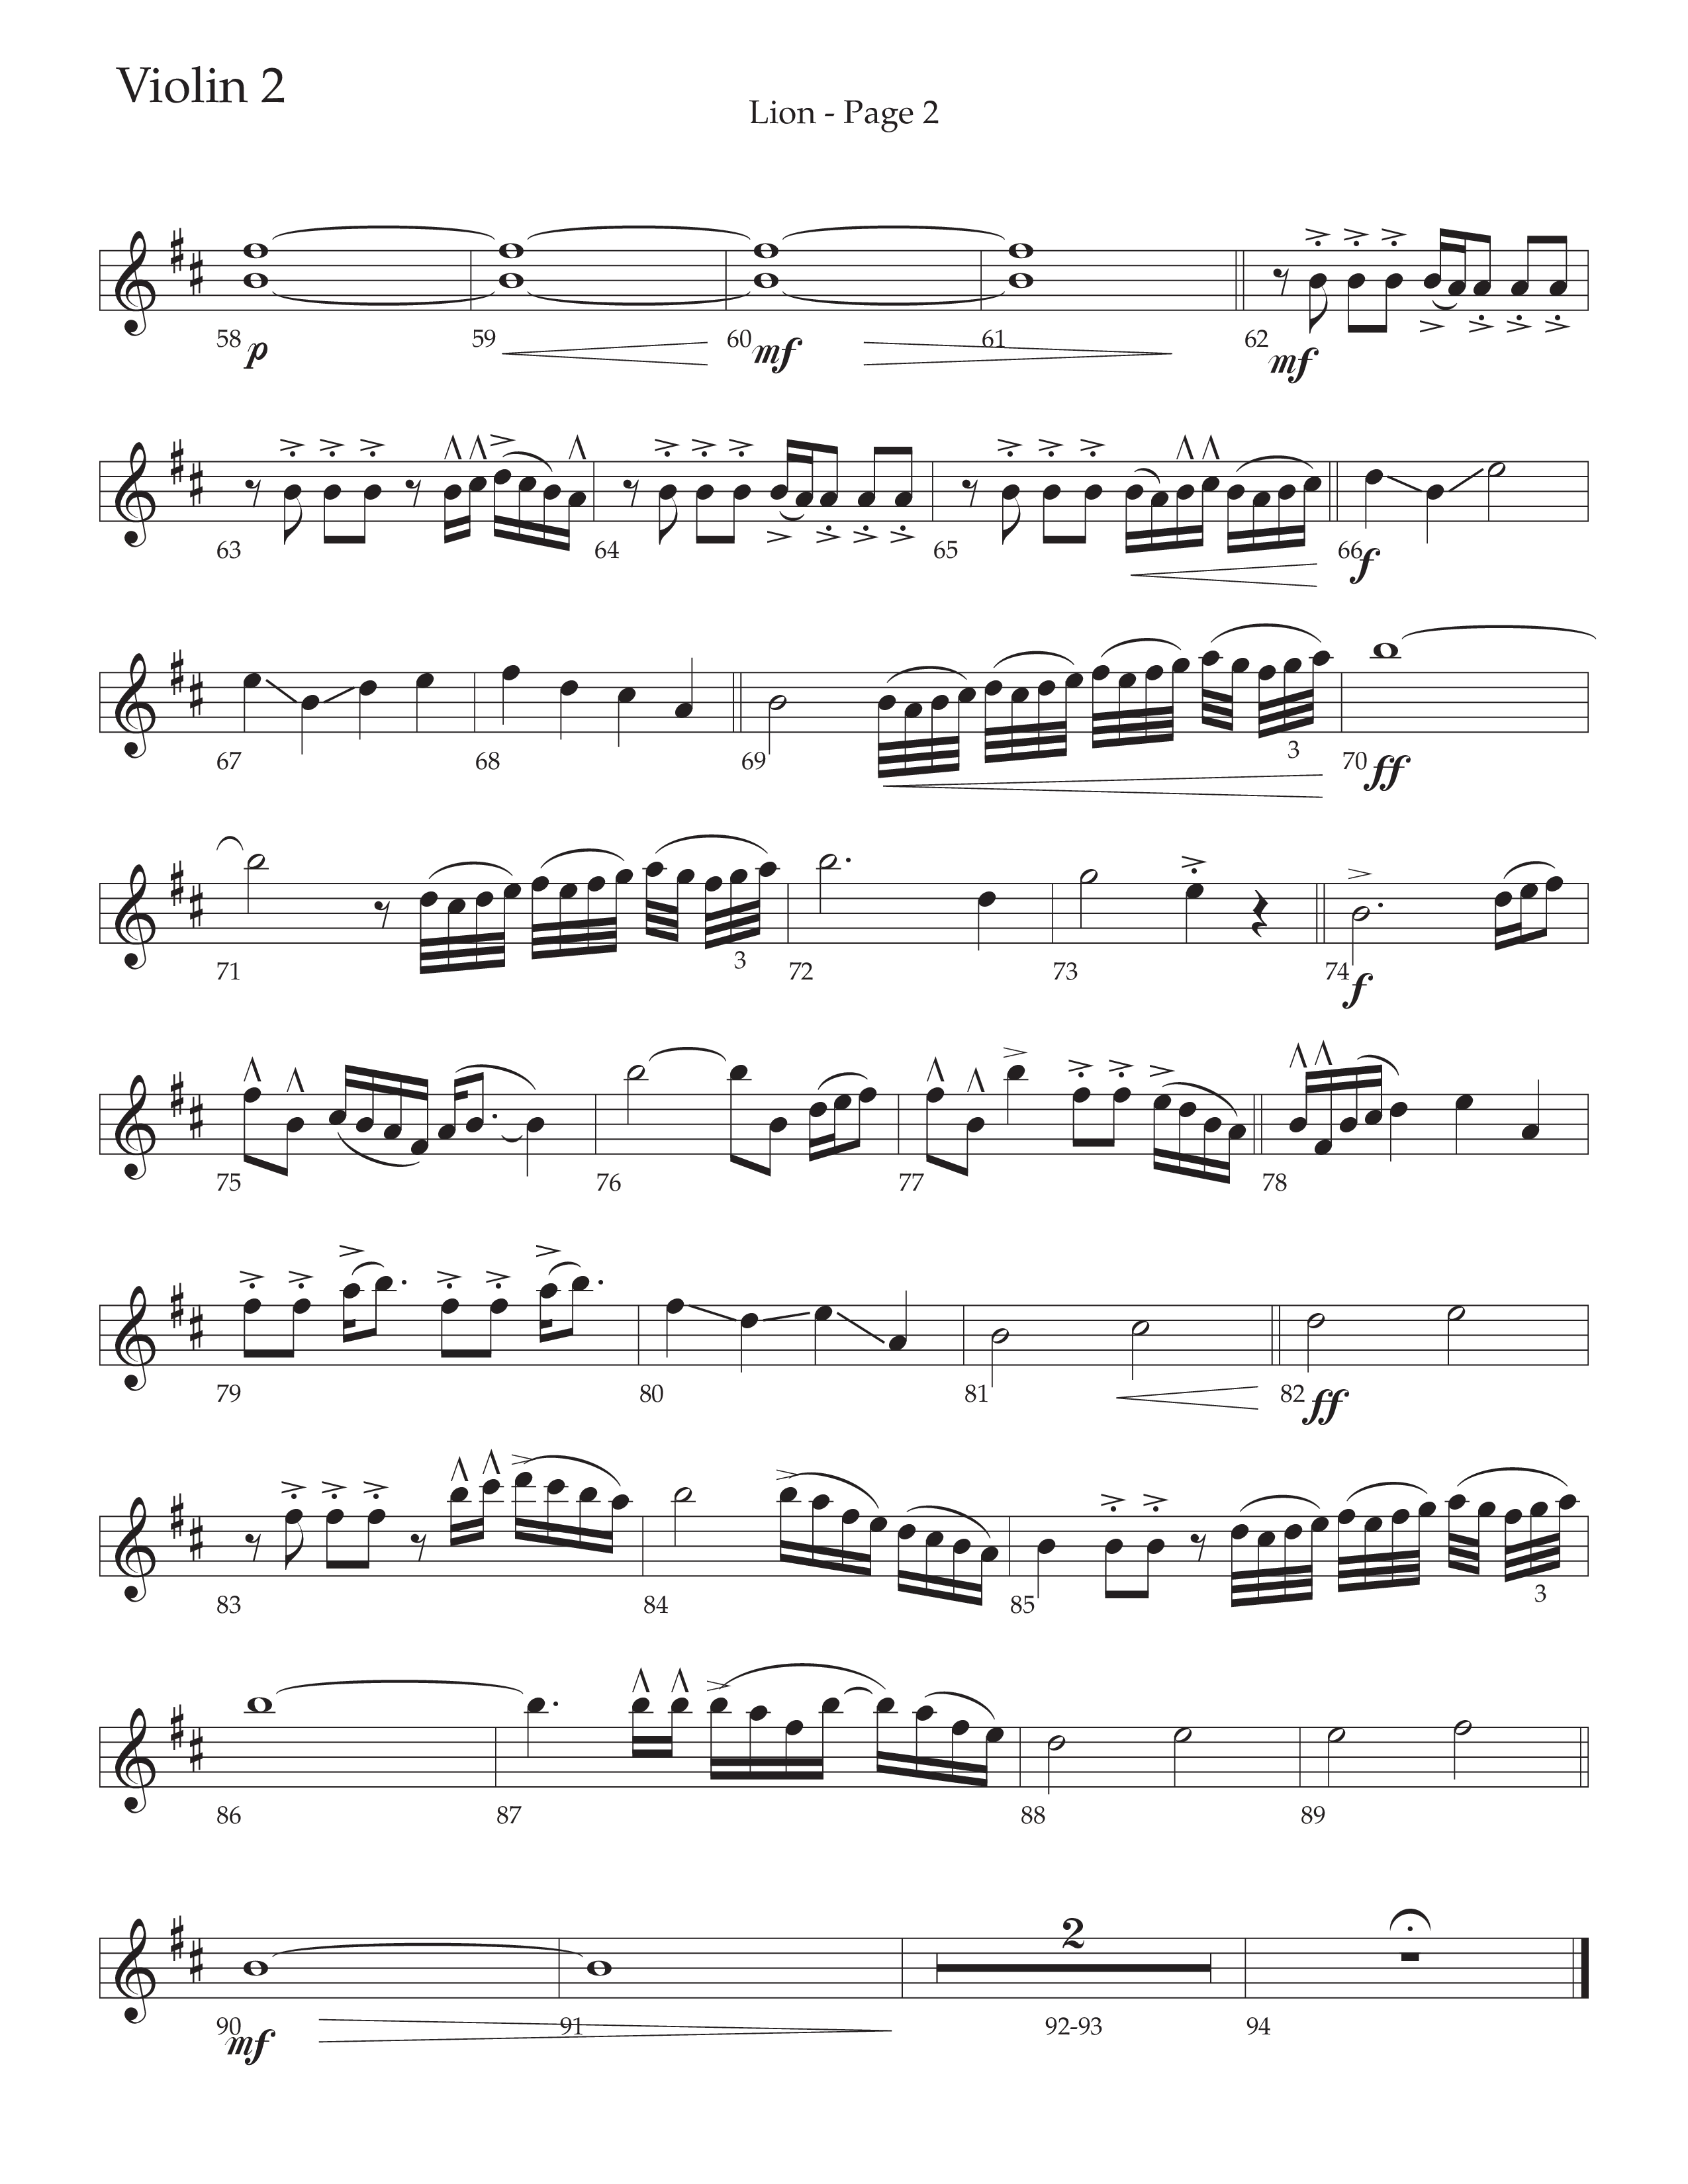 LION (Choral Anthem SATB) Violin 2 (Daywind Worship / Arr. Phil Nitz)